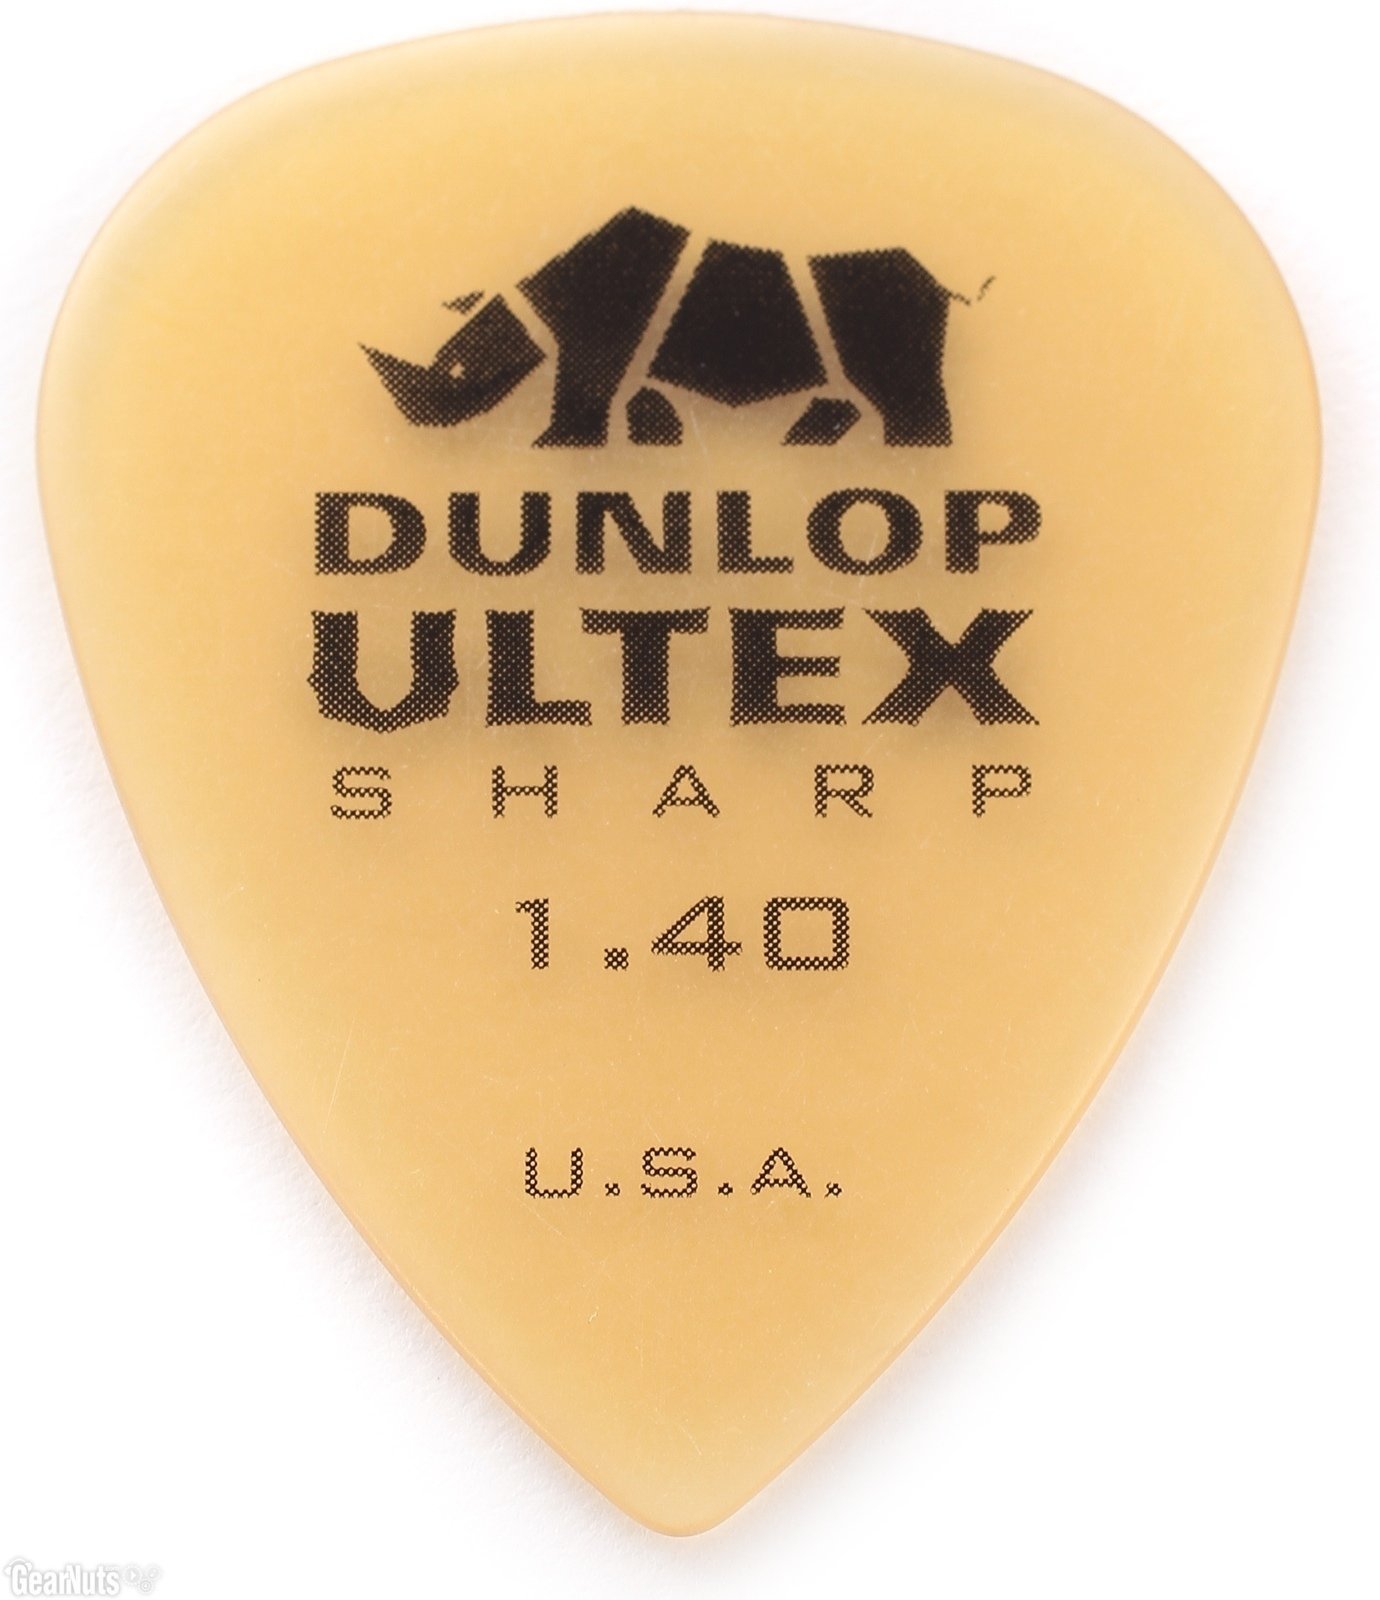 Kostka, piorko Dunlop 433P 140 Ultex 1,40 mm Kostka, piorko